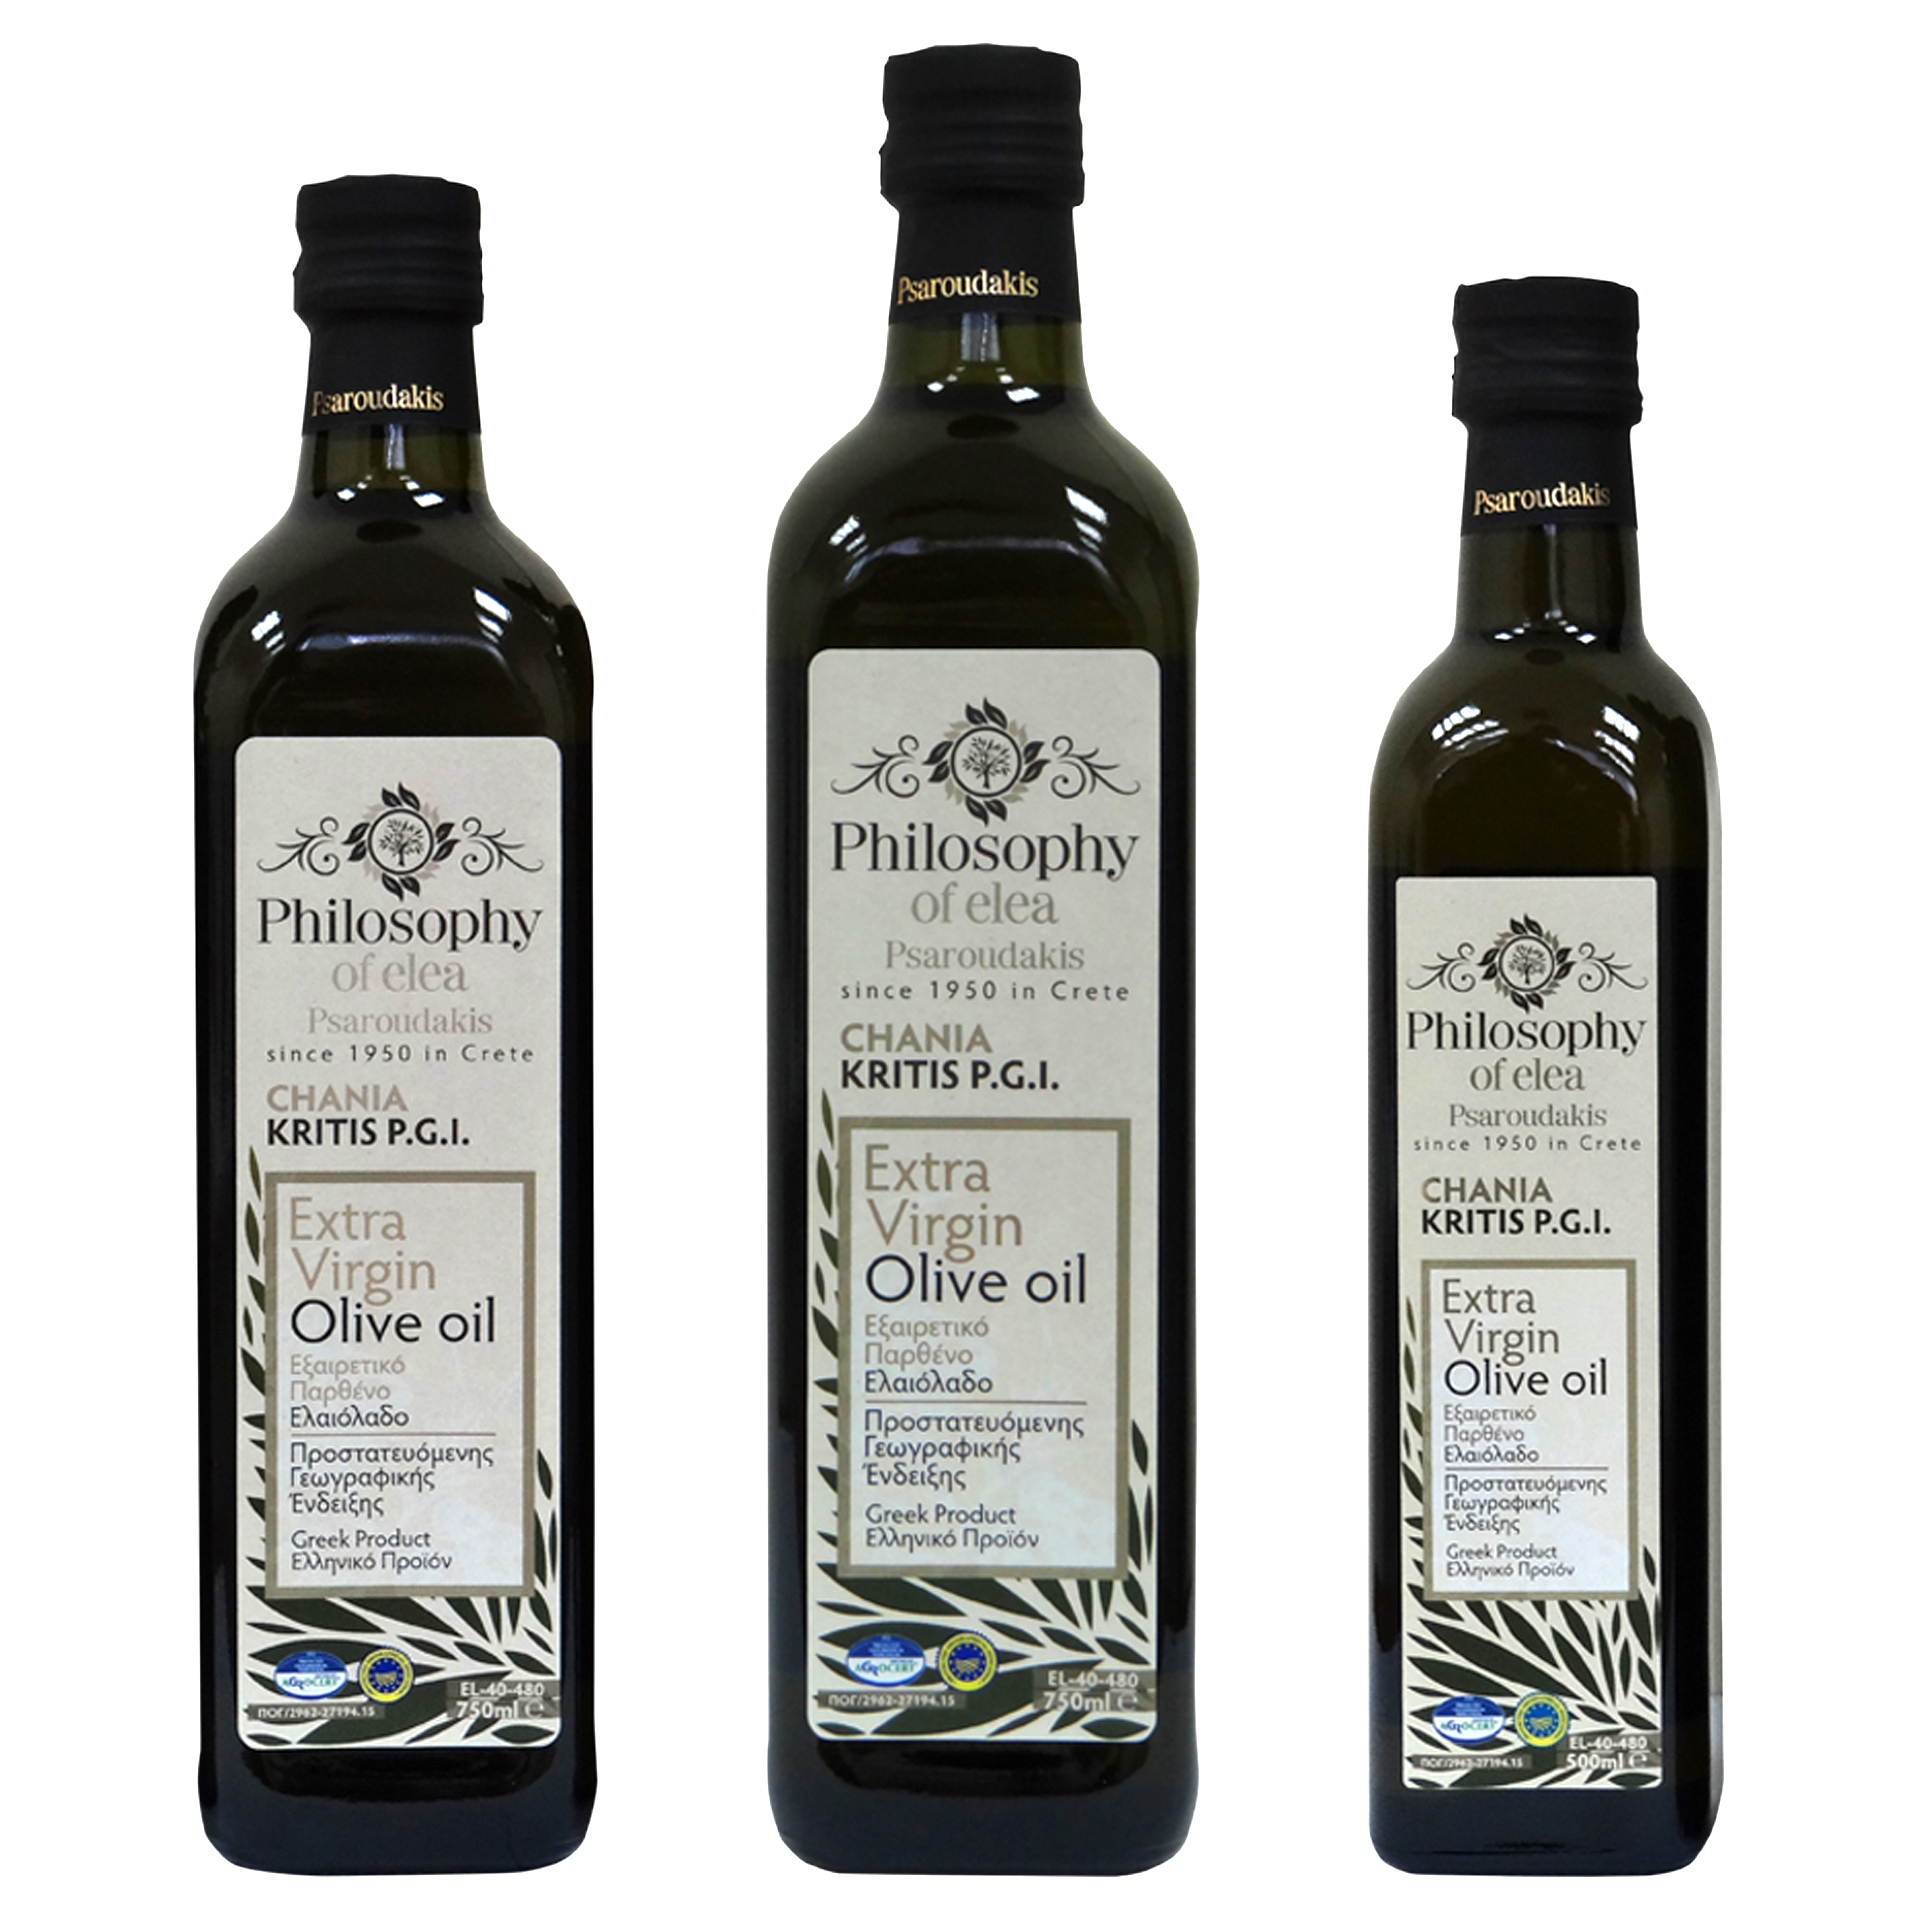 Chania PGI - Extra Virgin Olive Oil_2